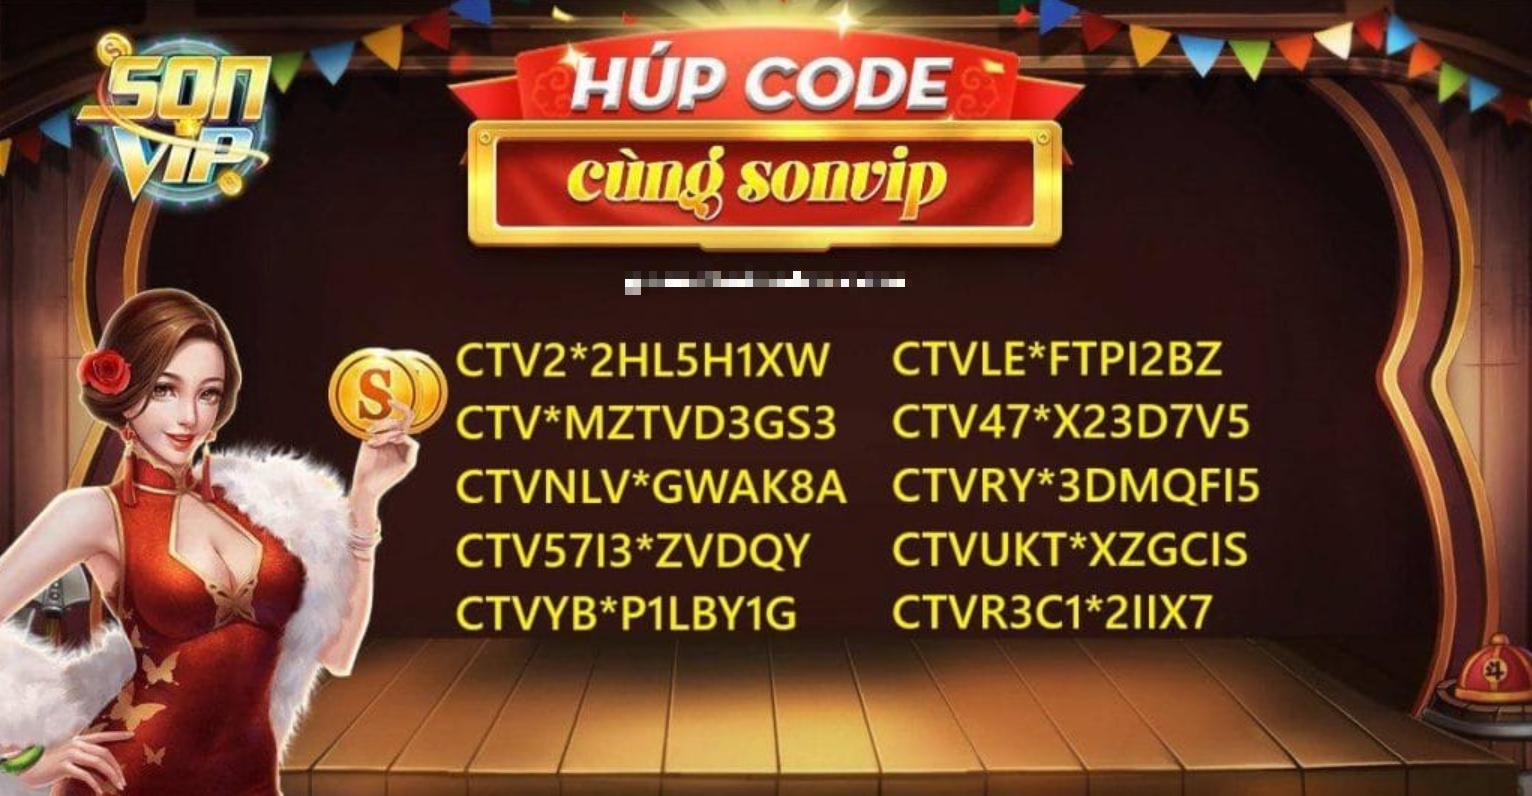 Giftcode Sonvip khởi nghiệp 